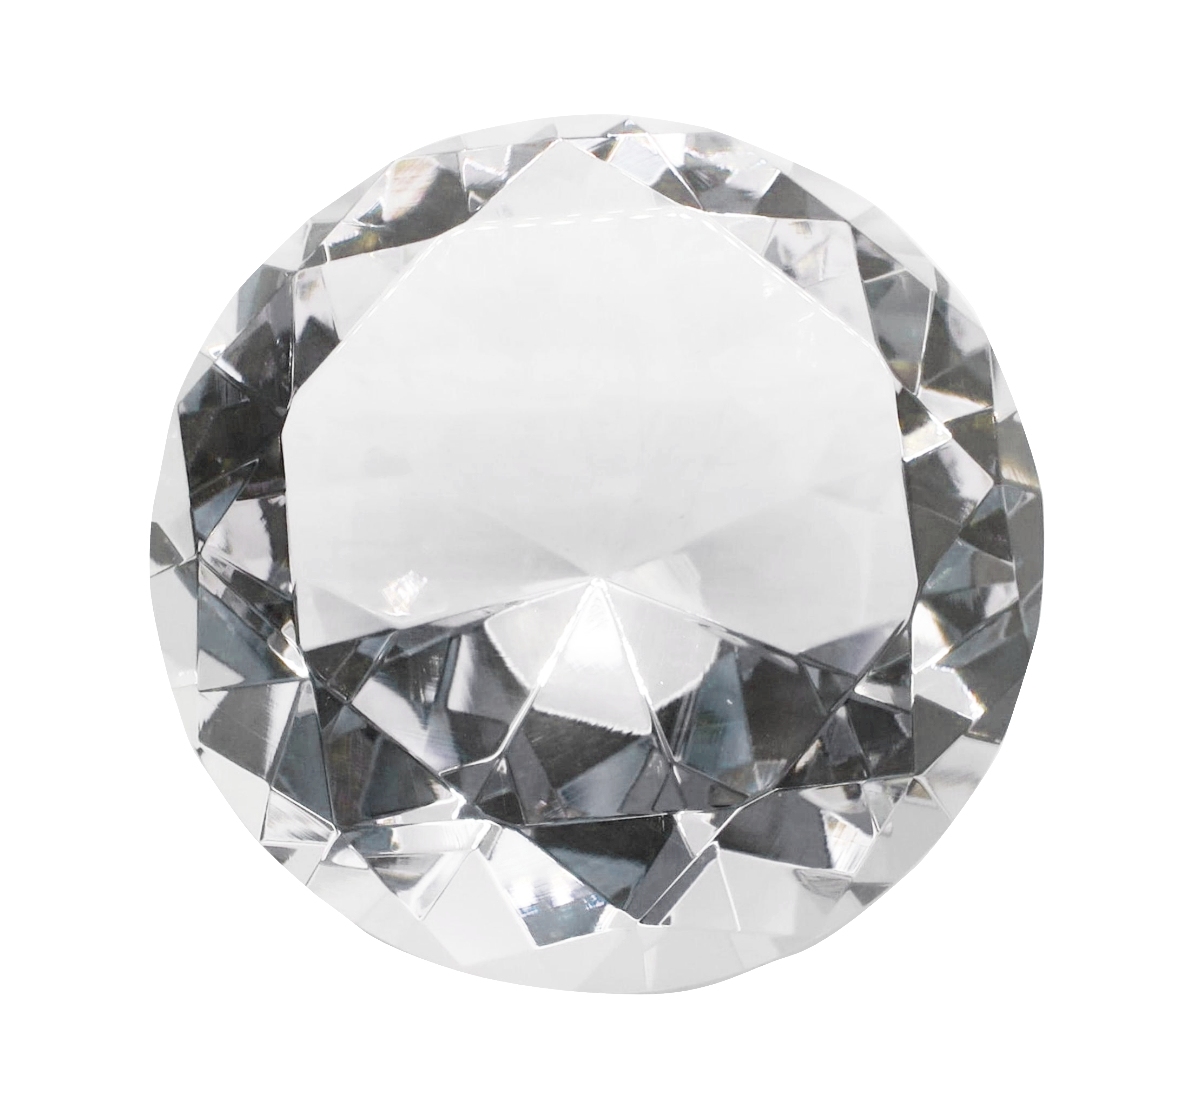 Crystal Auto Innendekoration, Asudaro Universal Diamant Kristall